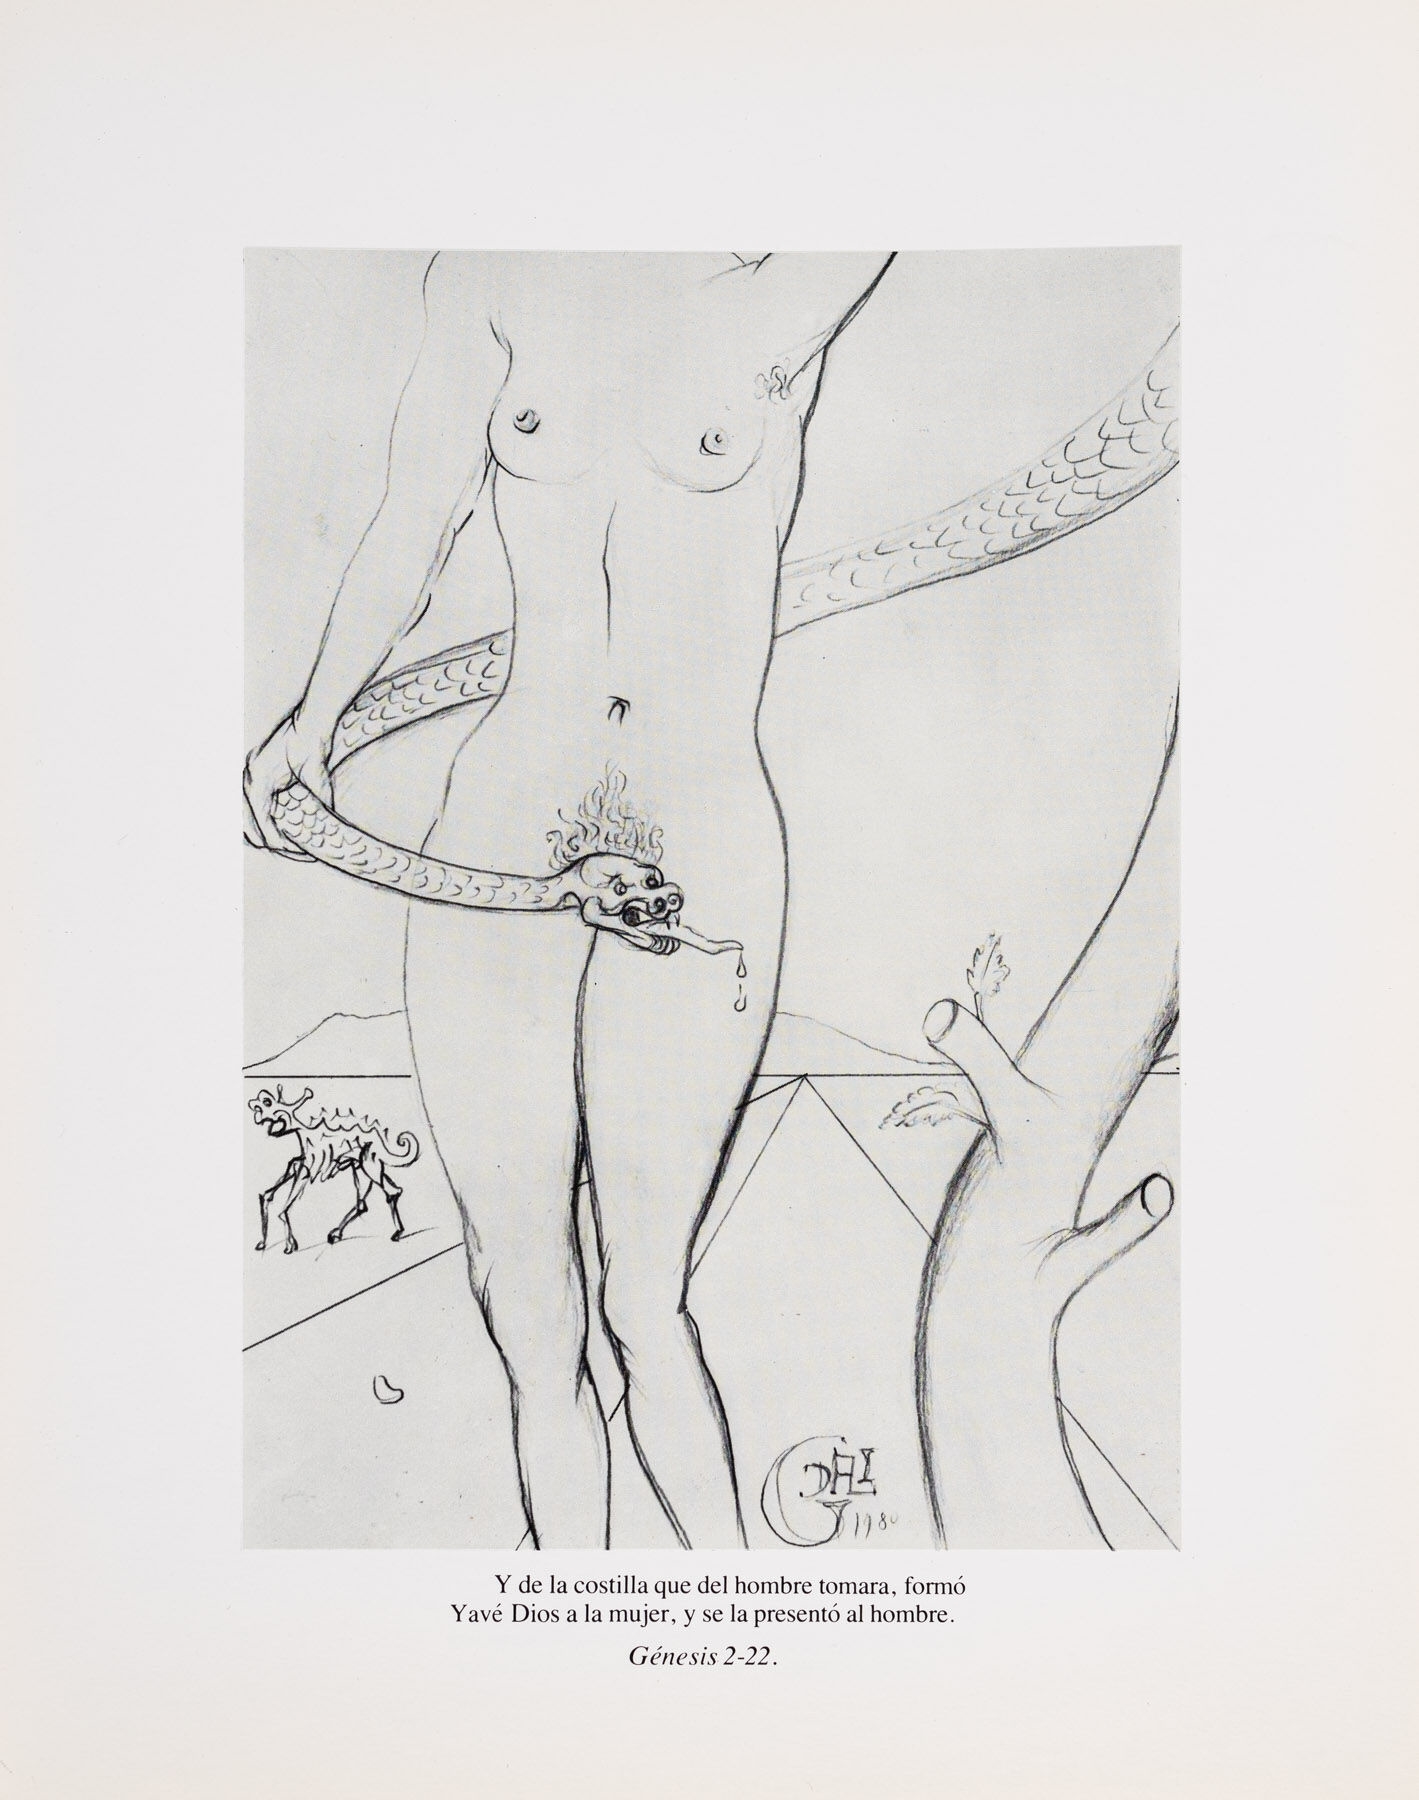 Genesis 2-22 by Salvador Dalí, 1980